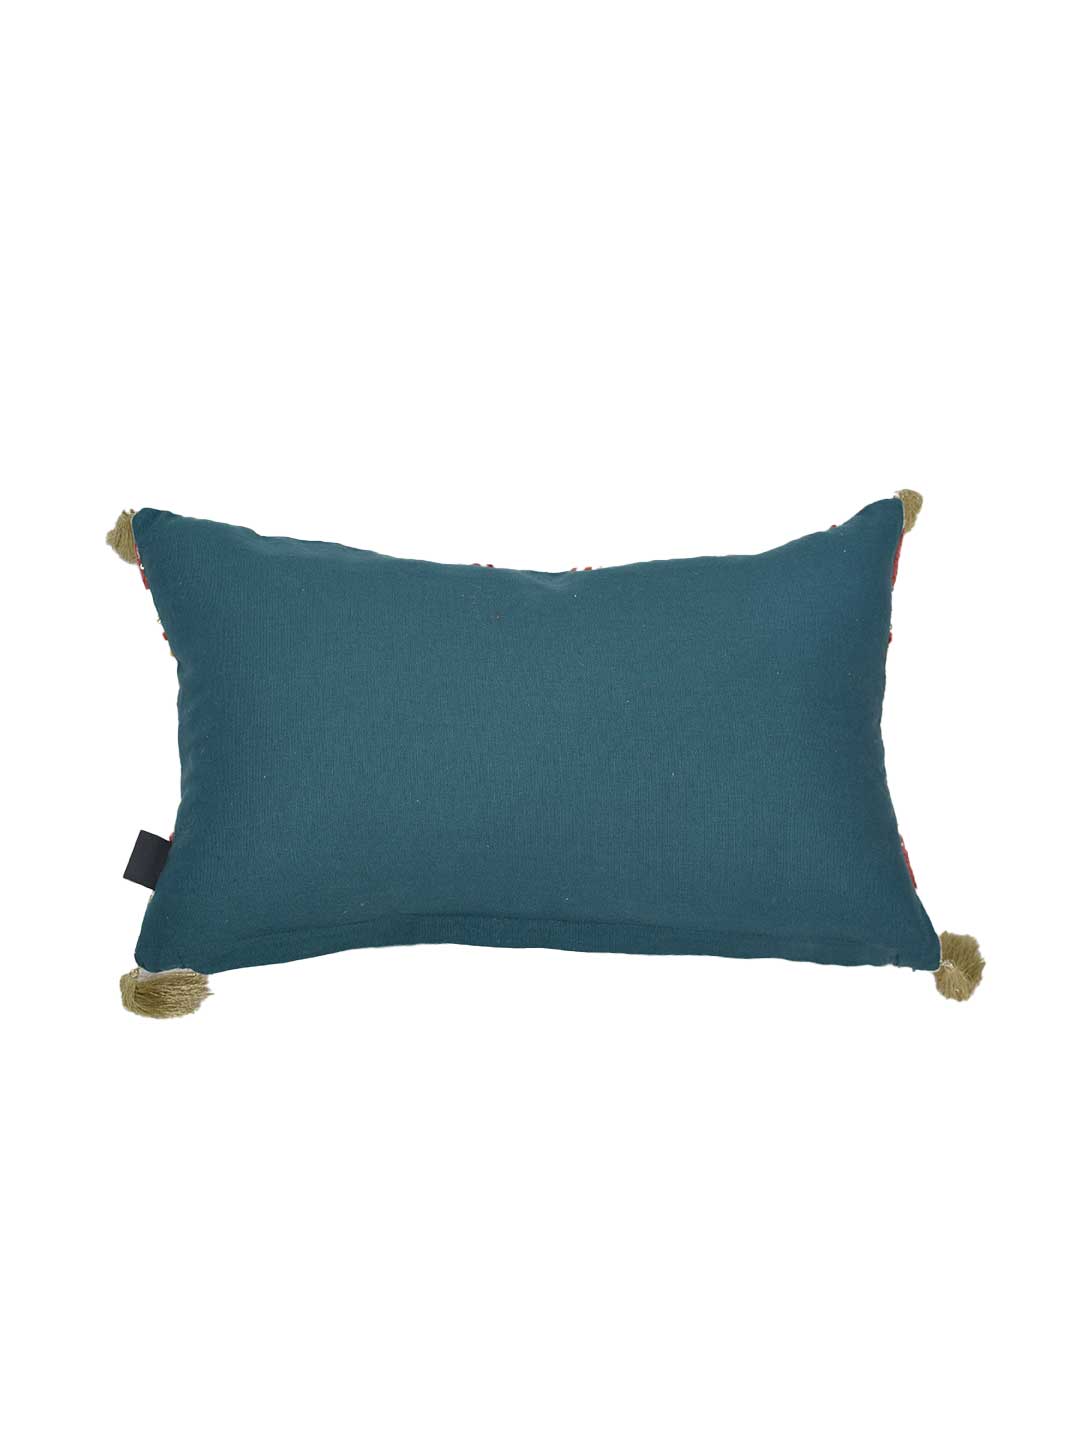 Blanc9 Summer Garden Cushion Cover with Filler 30x50cm